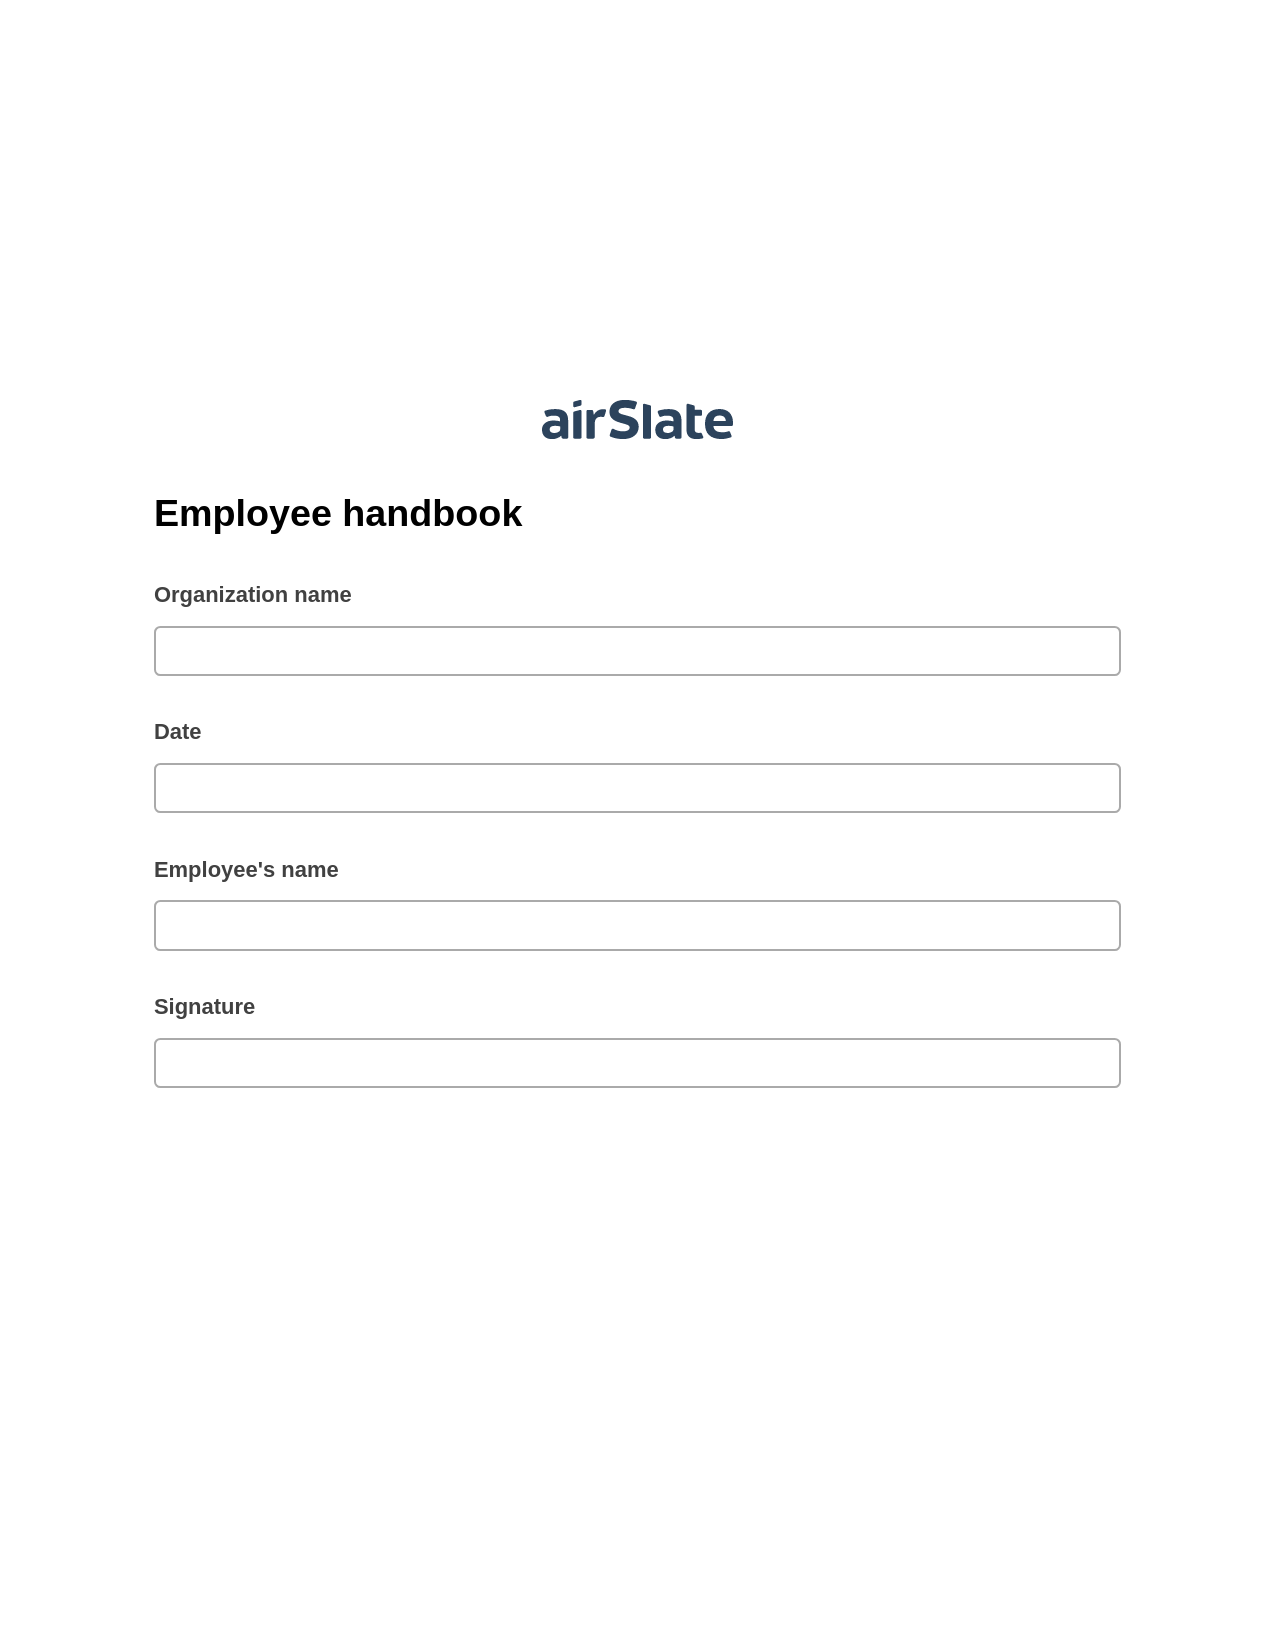 Employee handbook Pre-fill from Excel Spreadsheet Bot, Send Mailchimp Campaign Bot, Export to Smartsheet